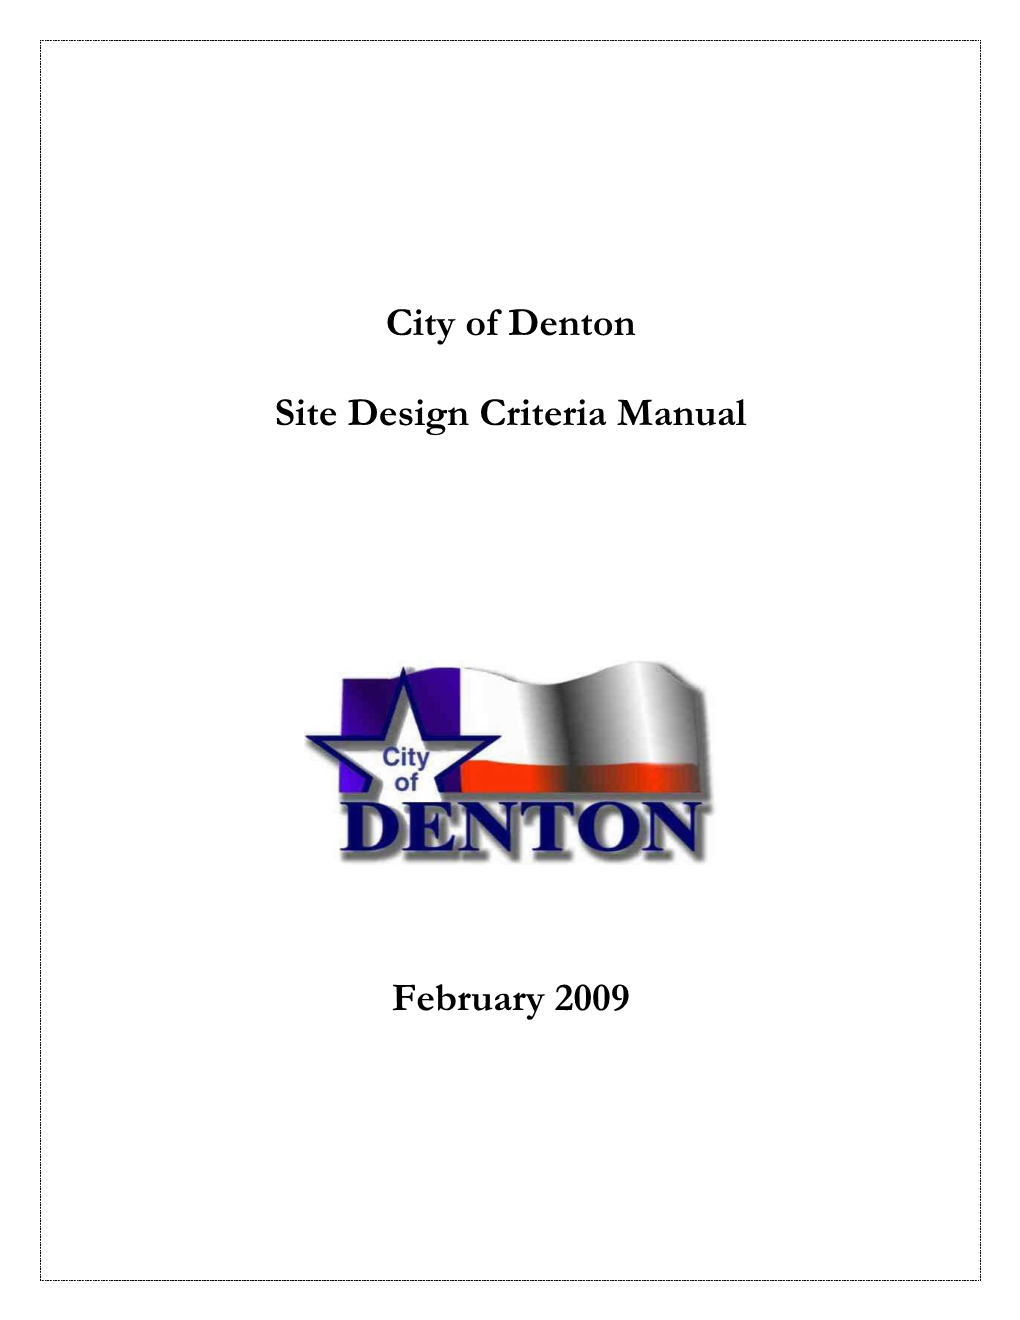 City of Denton Site Design Criteria Manual February 2009